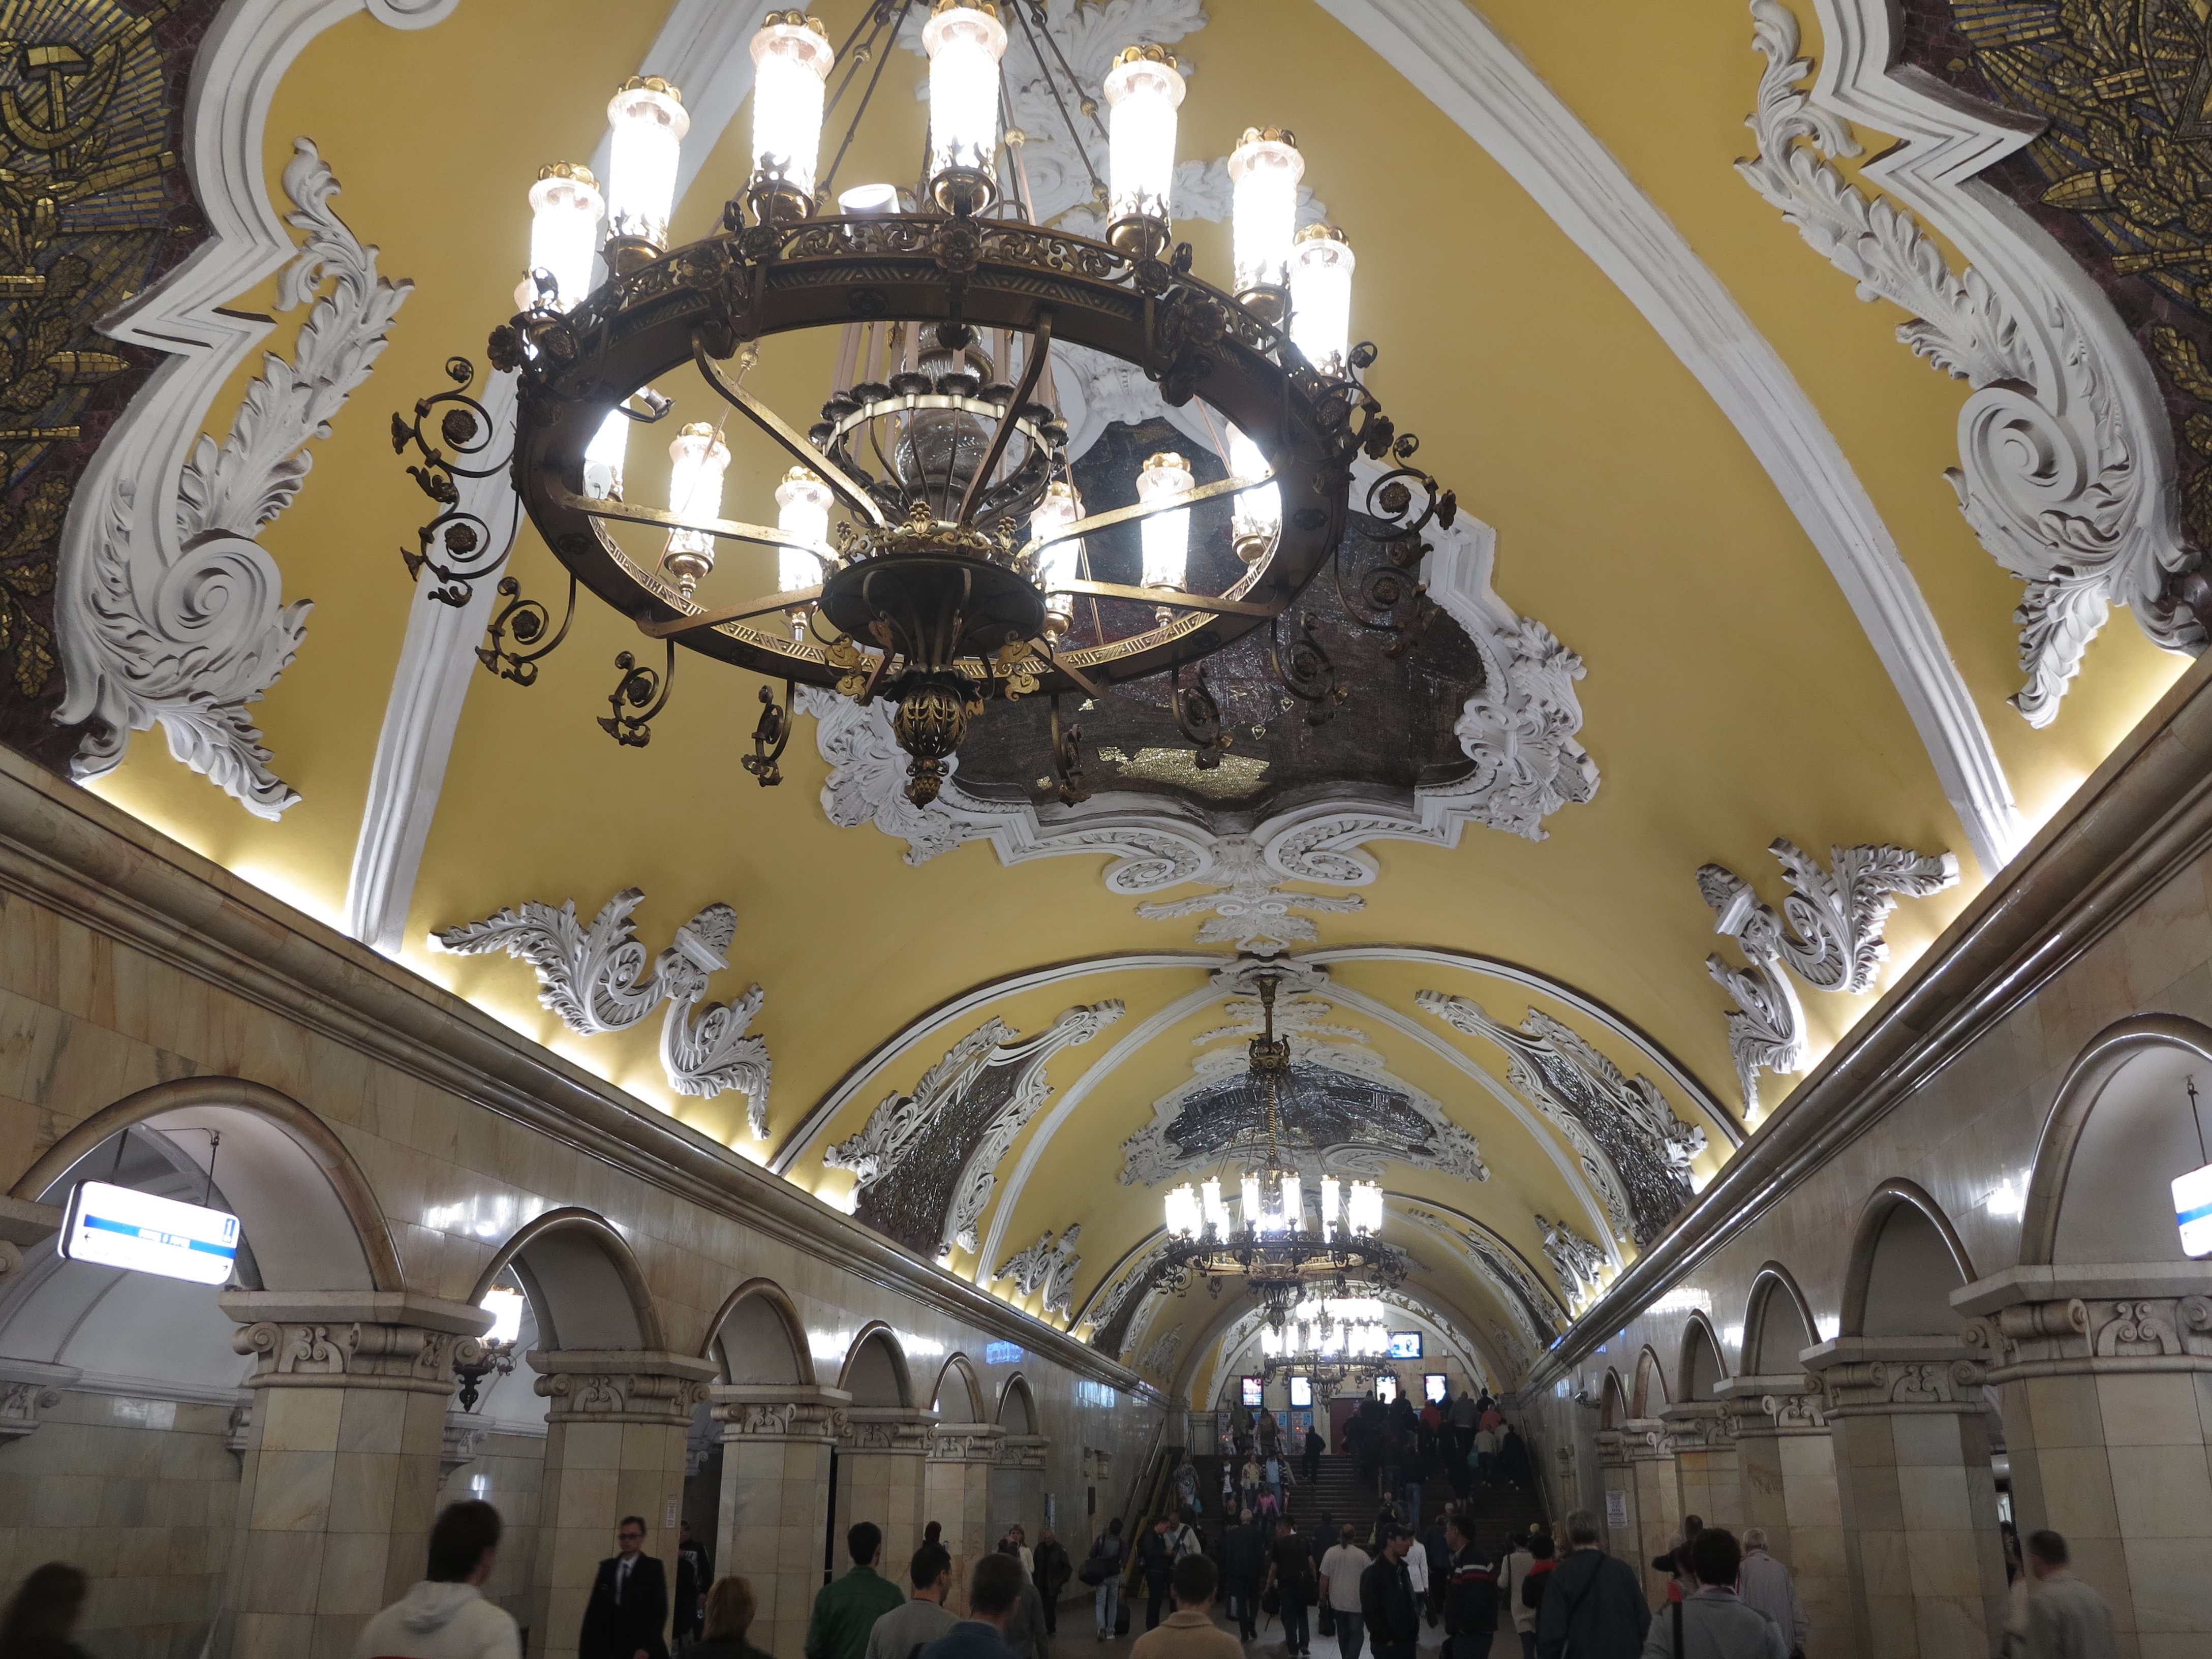 metro in Moscow, St. Petersburg